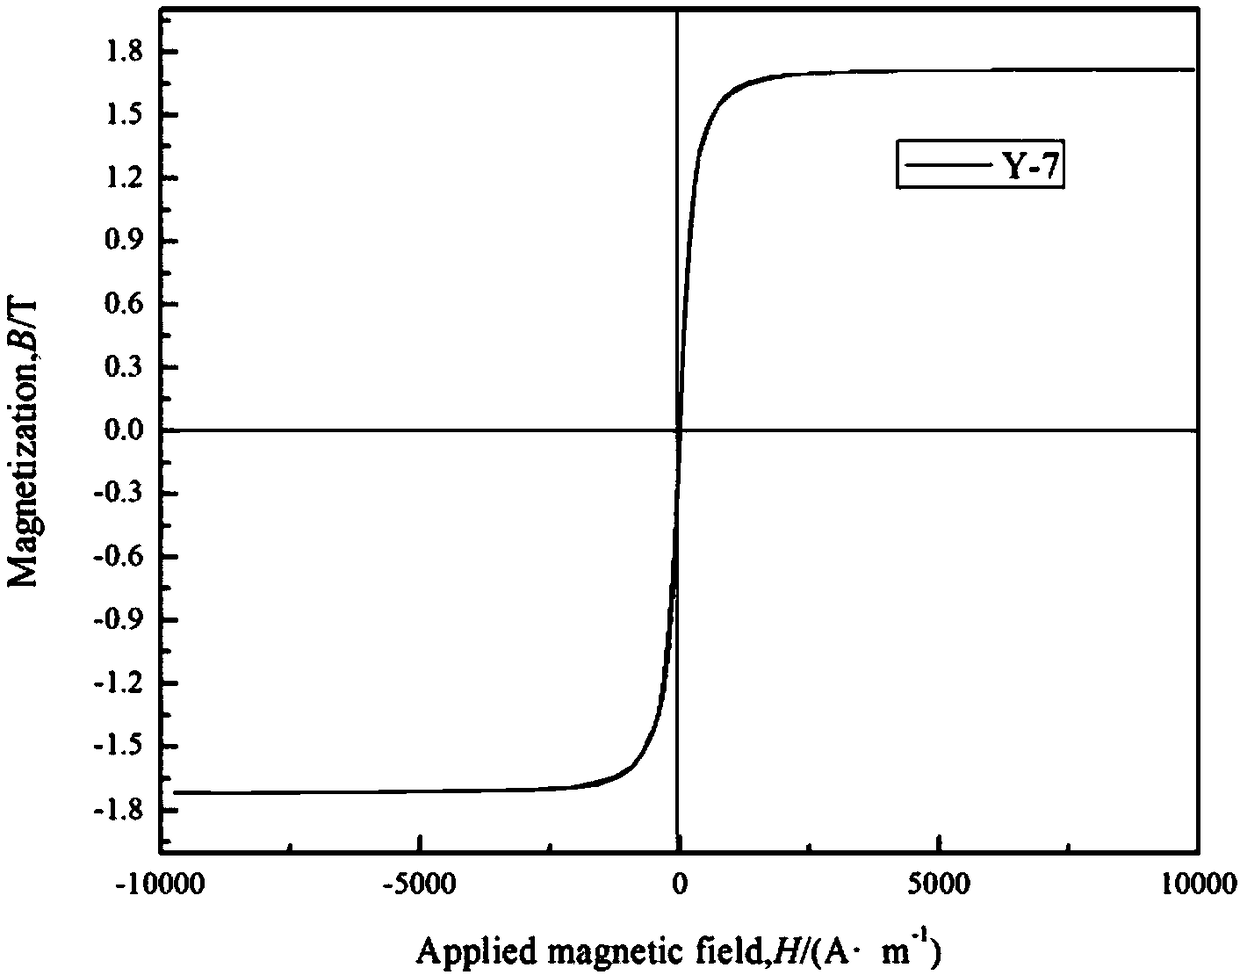 Multicomponent iron-based amorphous soft magnetic alloy